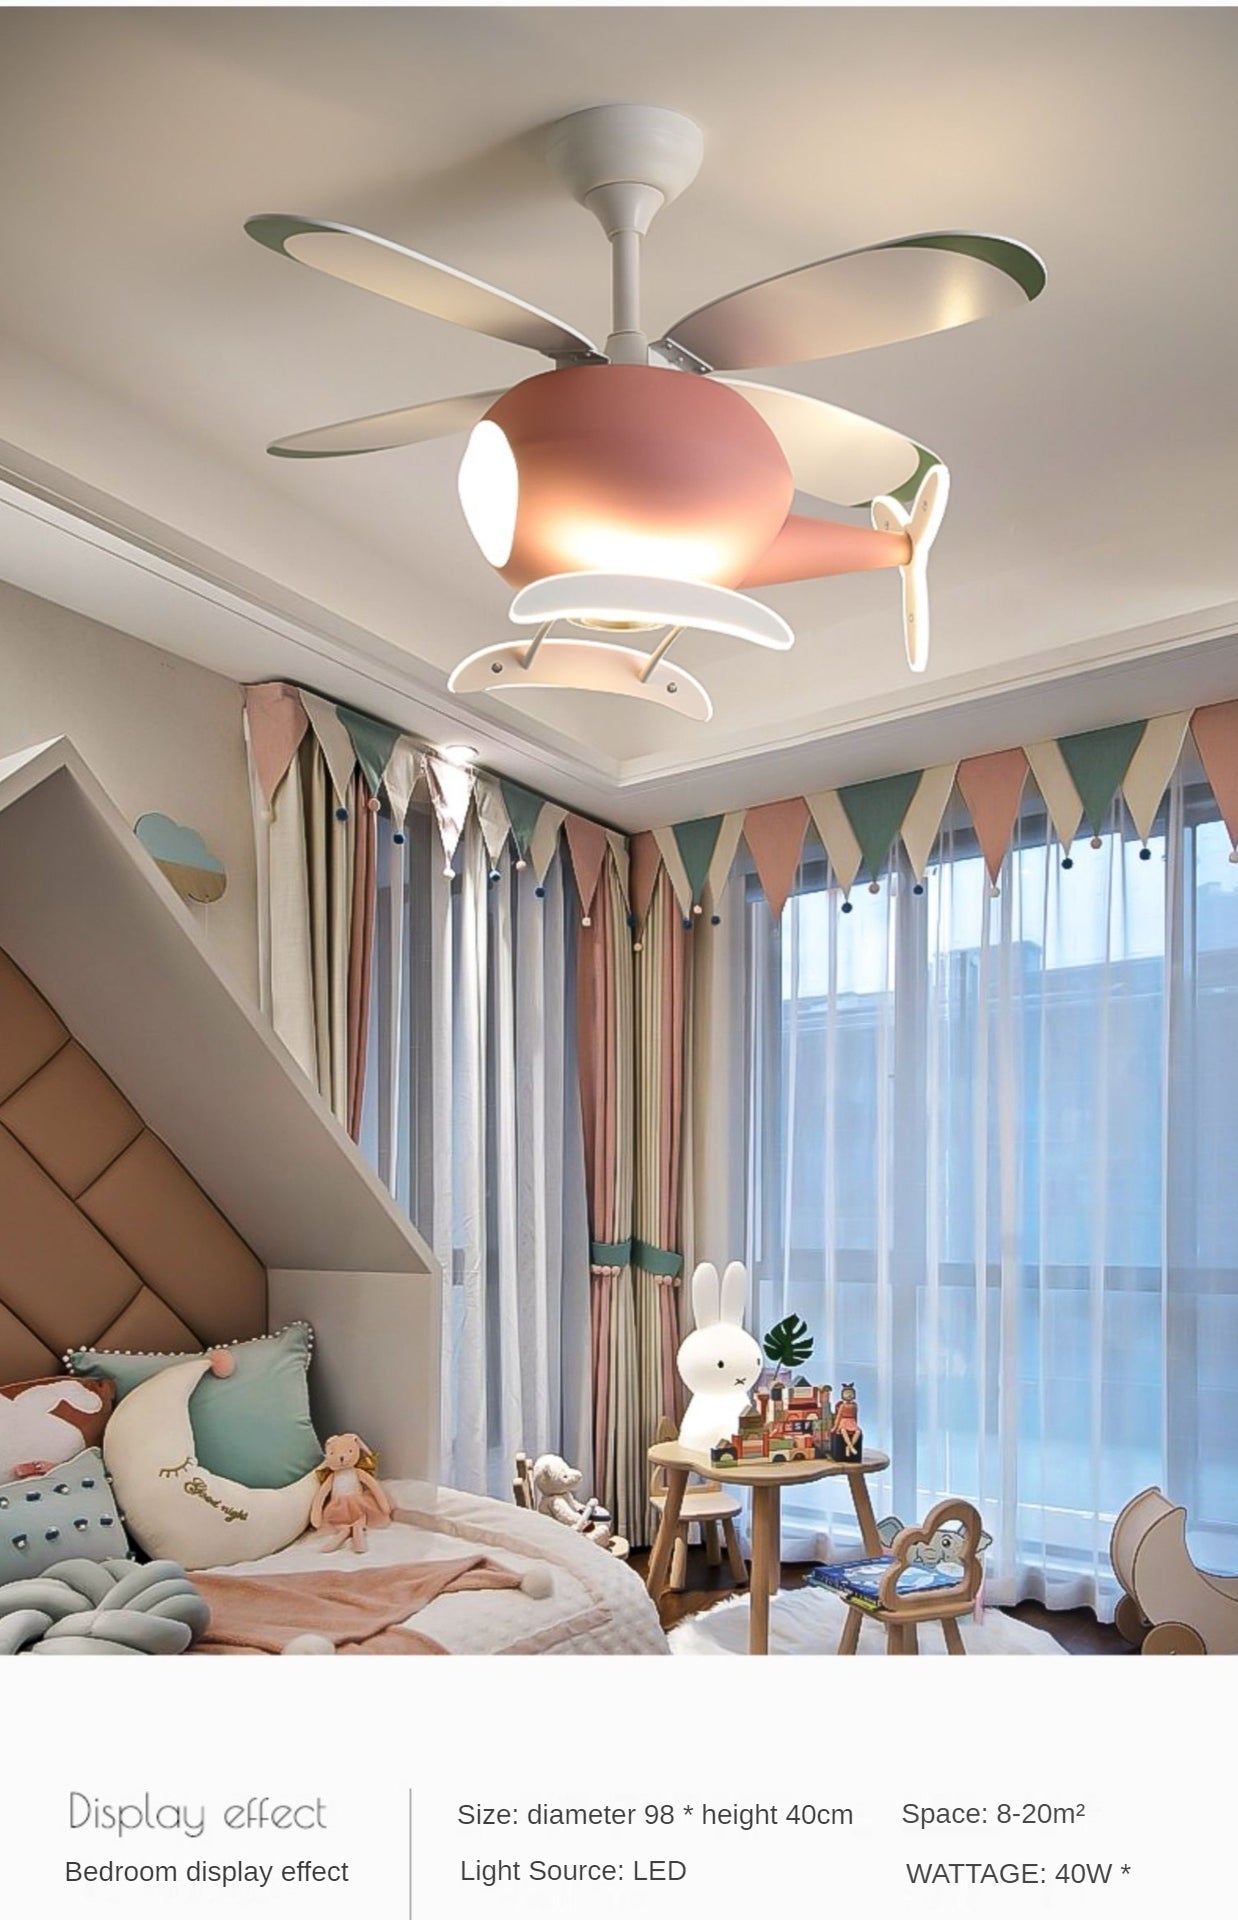 Children's Room Airplane Ceiling Fan Lights